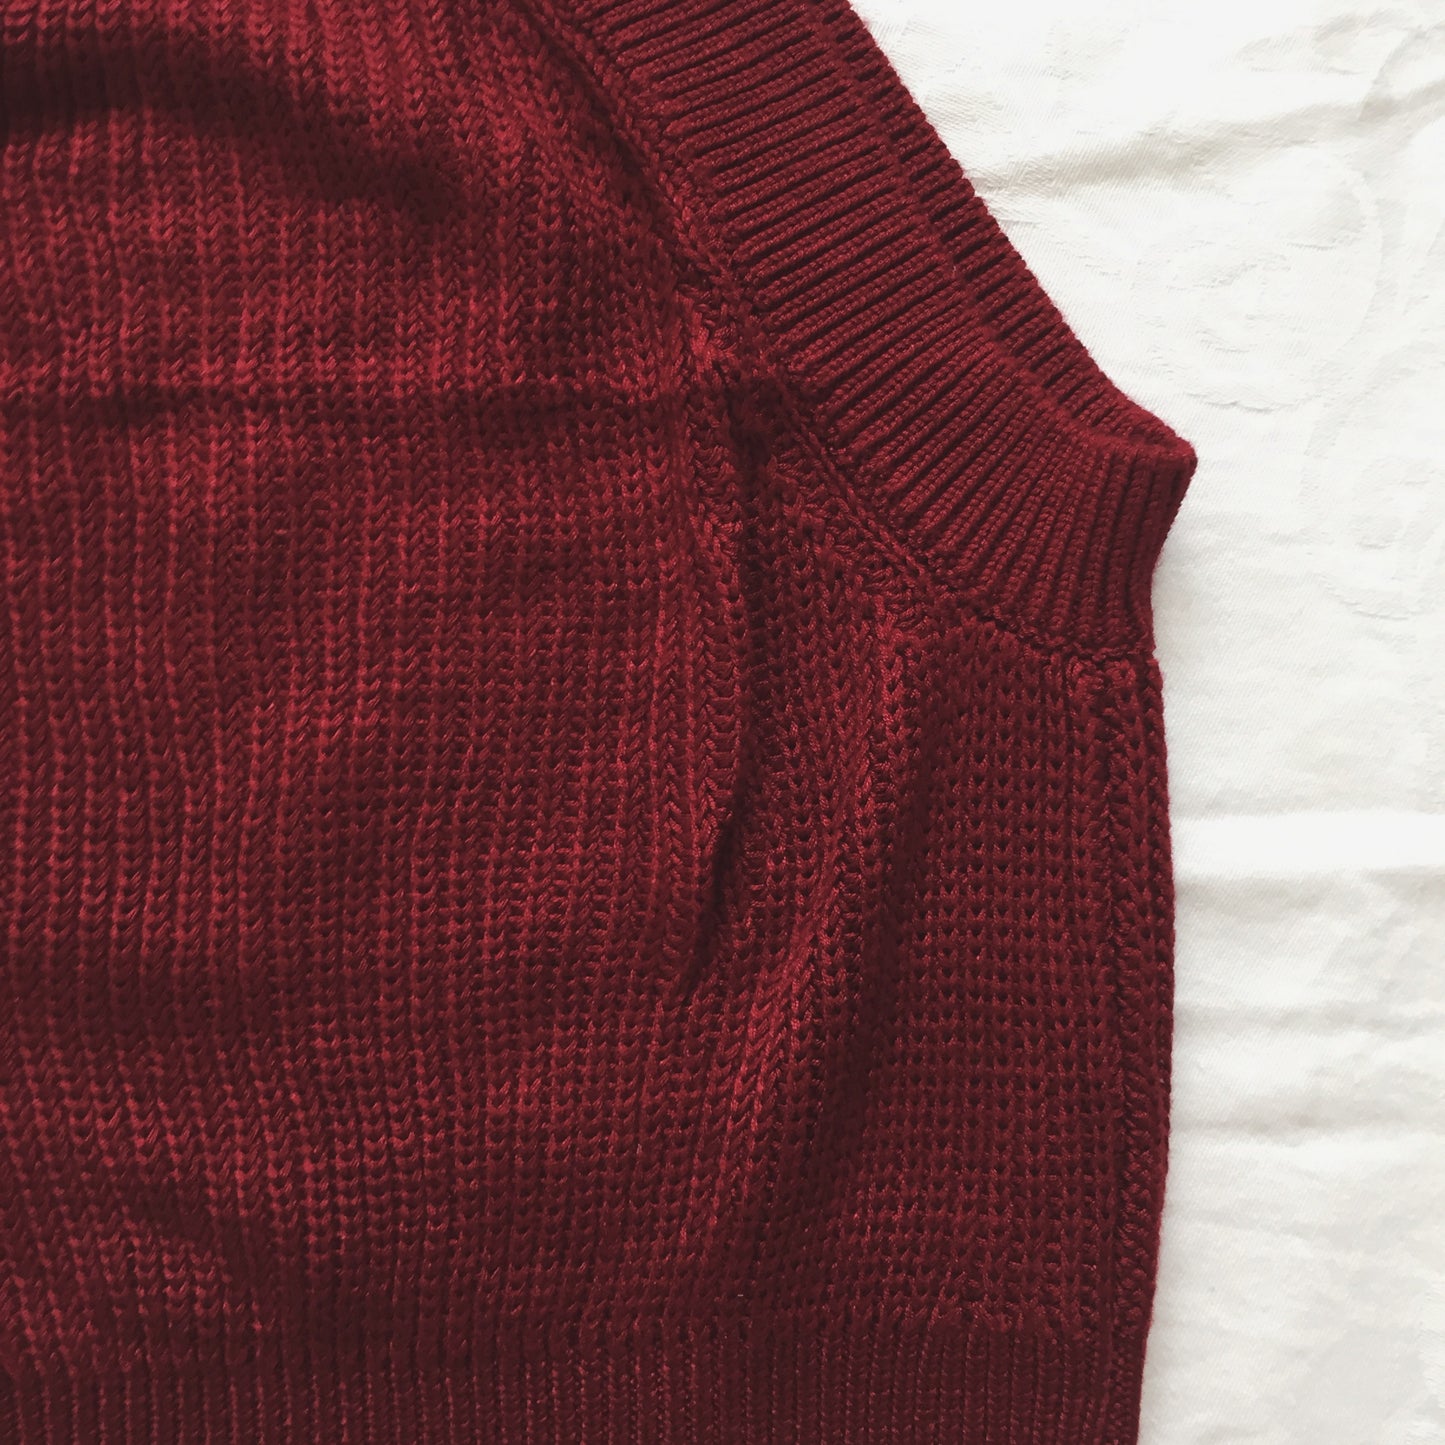 Sweater Knit Halter Crop Top (7 Colors)